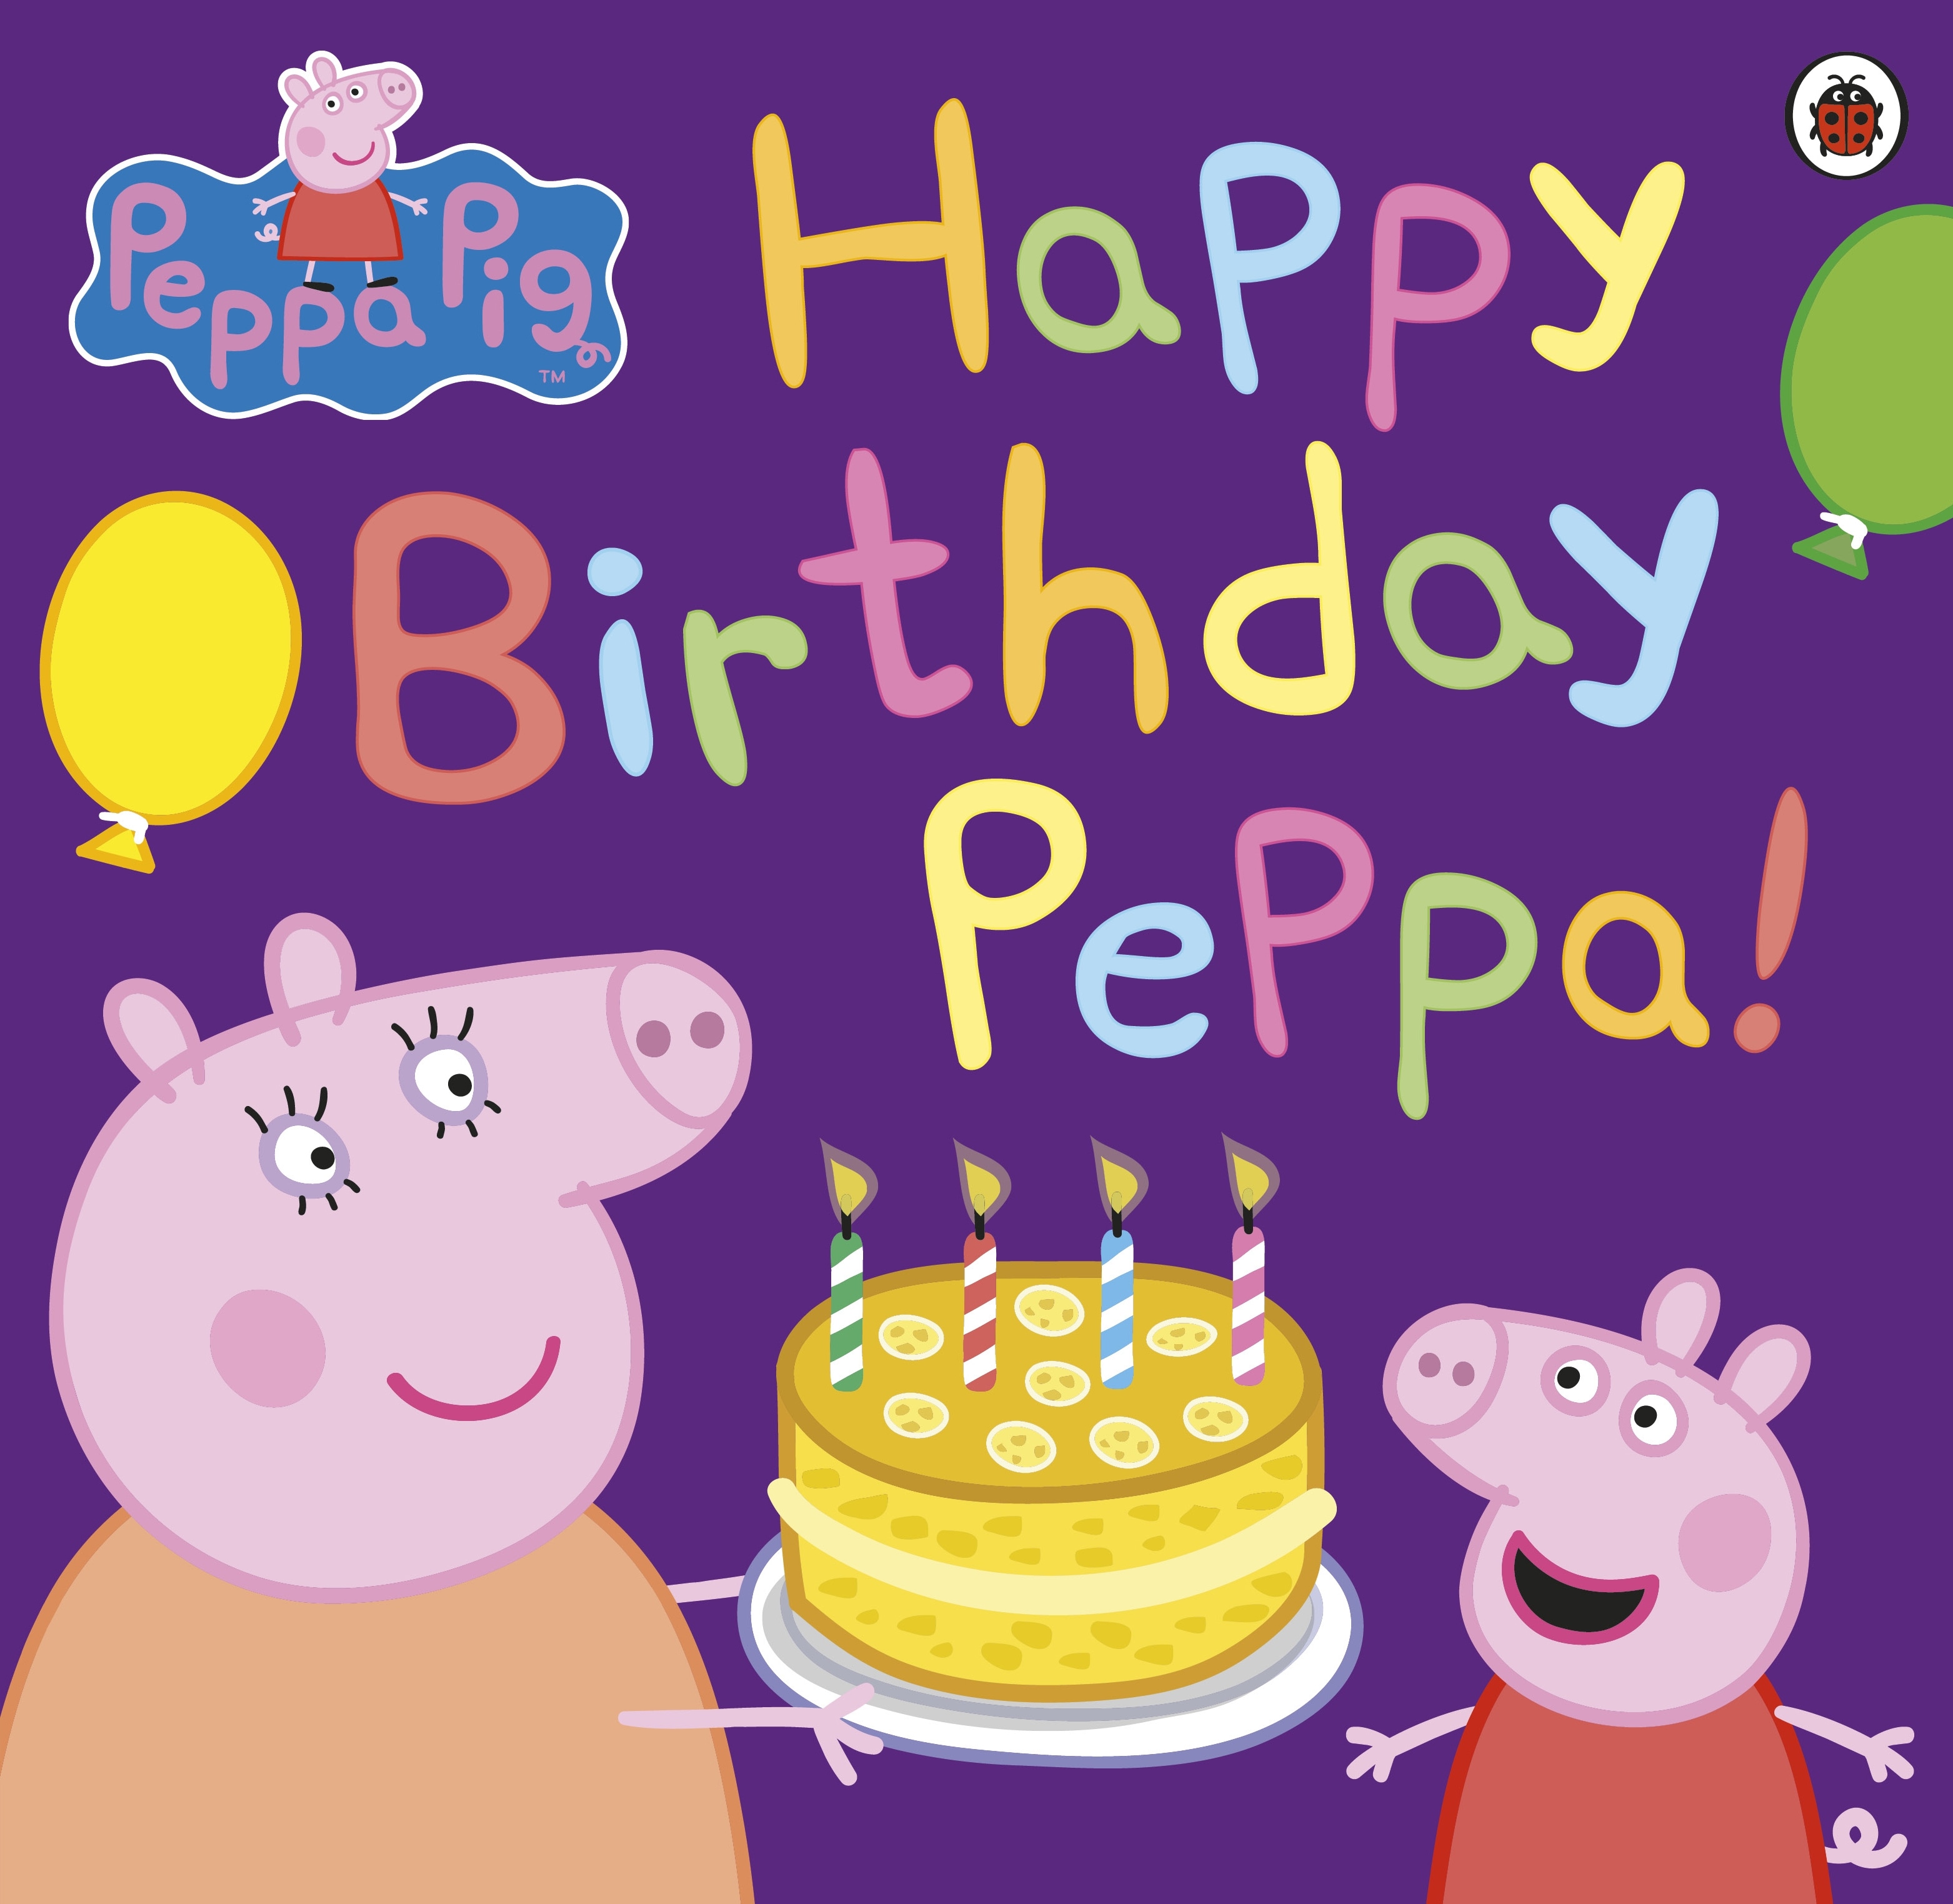 Book “Peppa Pig: Happy Birthday Peppa!” by Peppa Pig — May 2, 2013